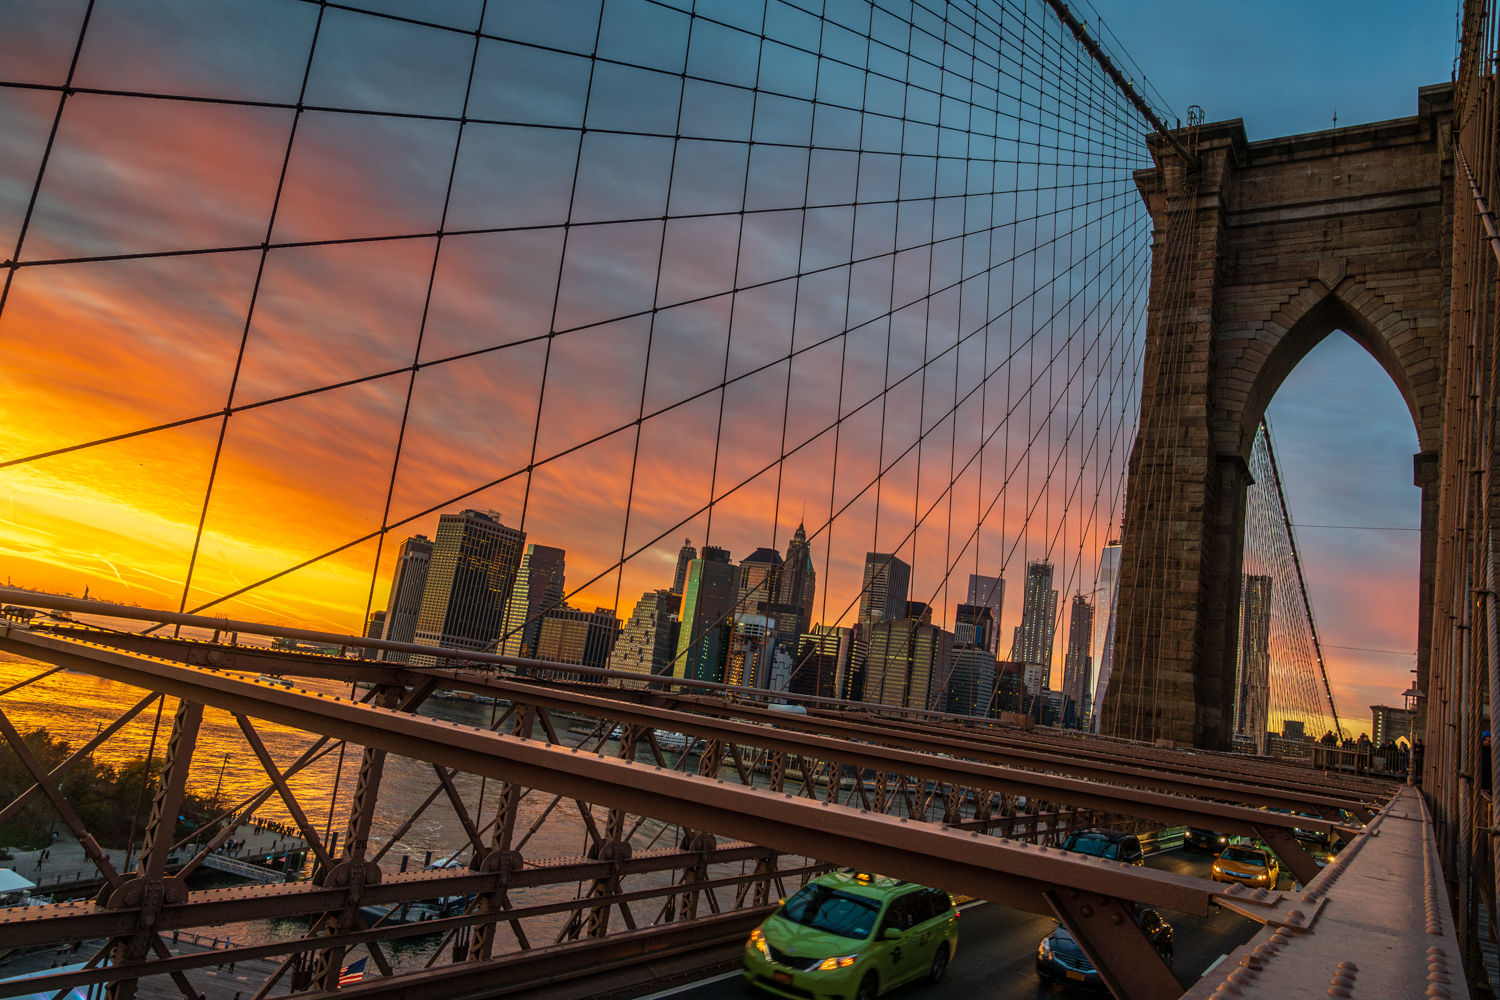 Fiery skies in twilight's dance,Brooklyn Bridge, a fleeting glance,Manhattan's lights begin to gleam,A taxi's journey through...